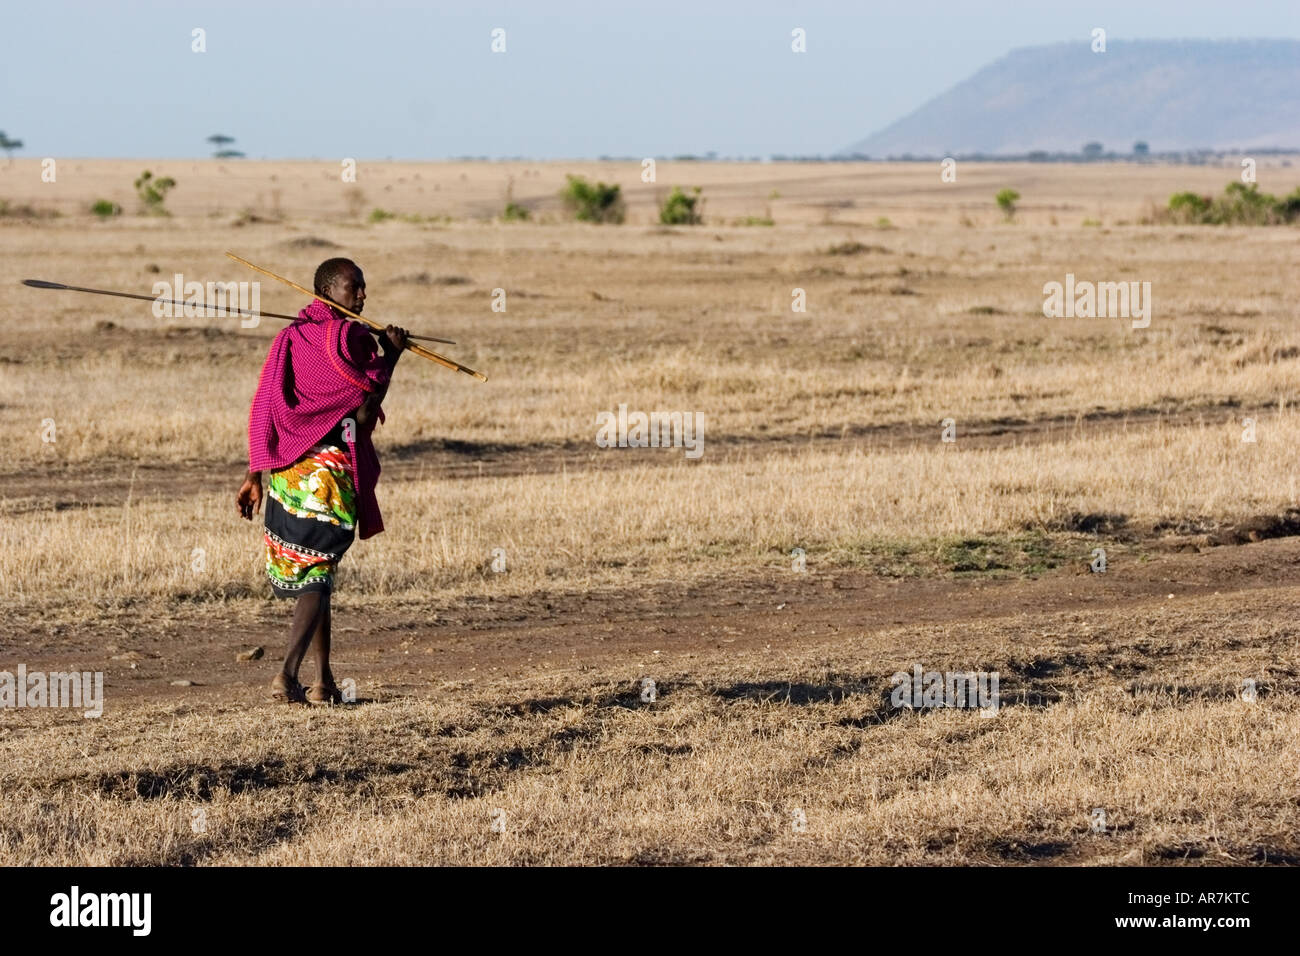 Maasai man walking on the plains of the Masai Mara carrying a spear Stock Photo